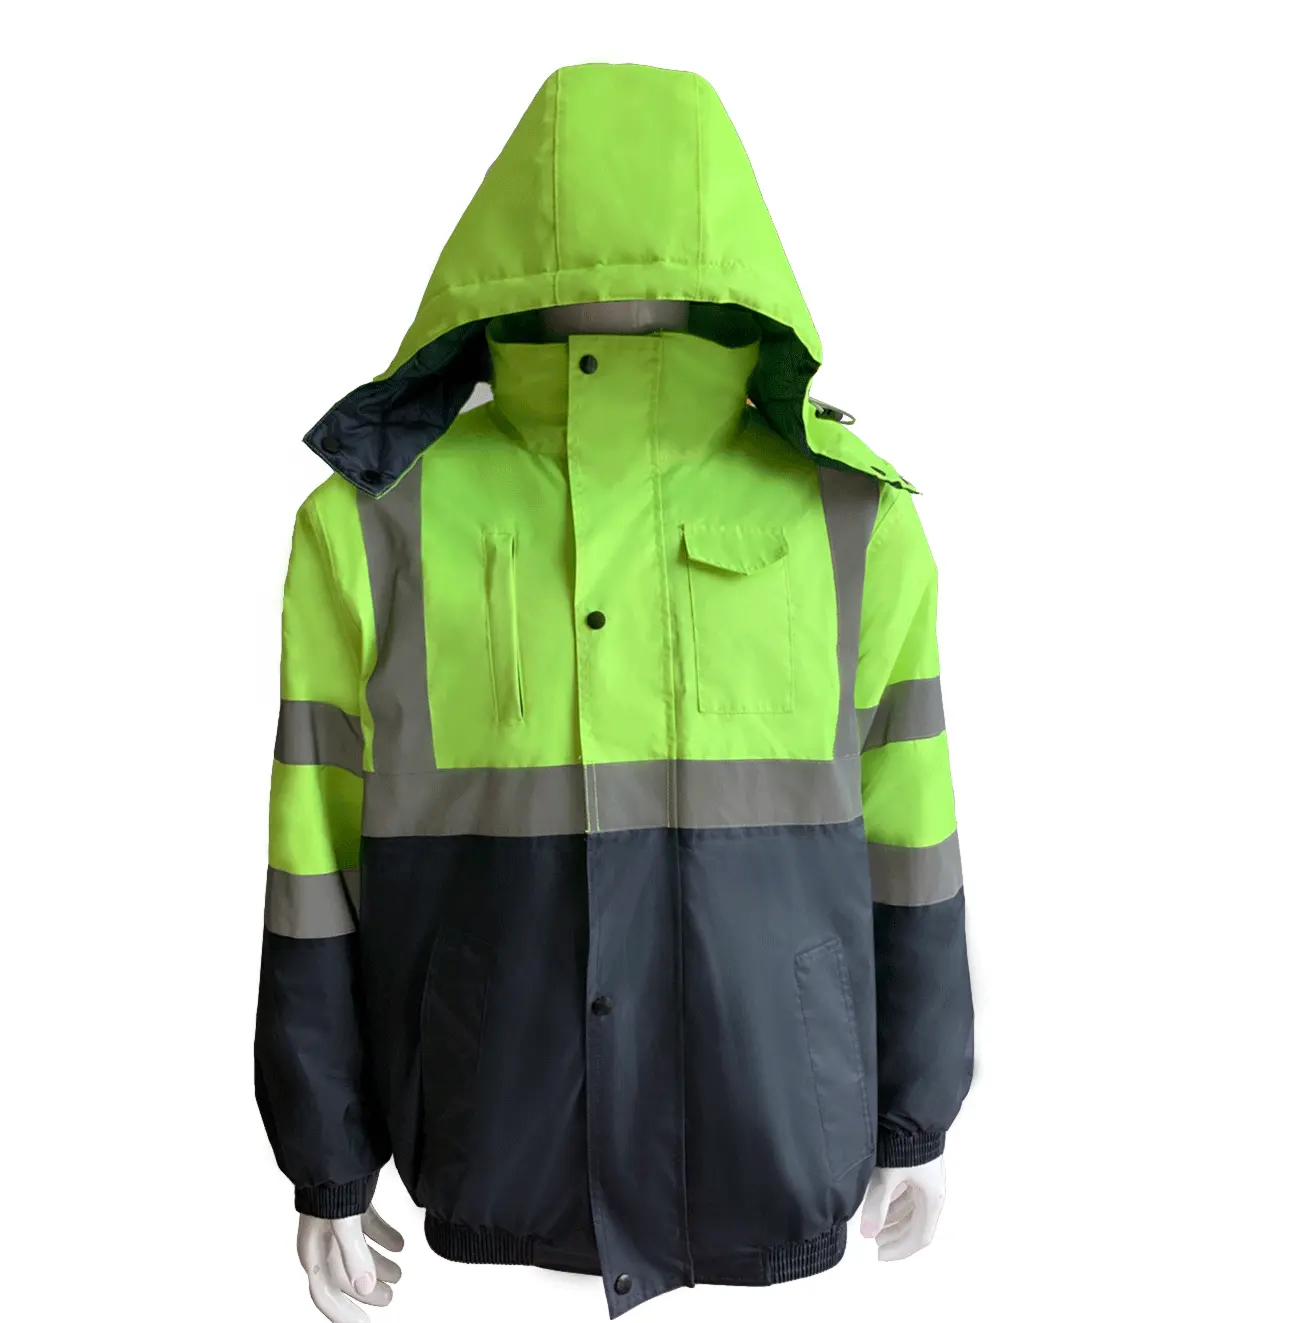 Hot Sale Hi-Vis reflective safety raincoat Waterproof Jacket